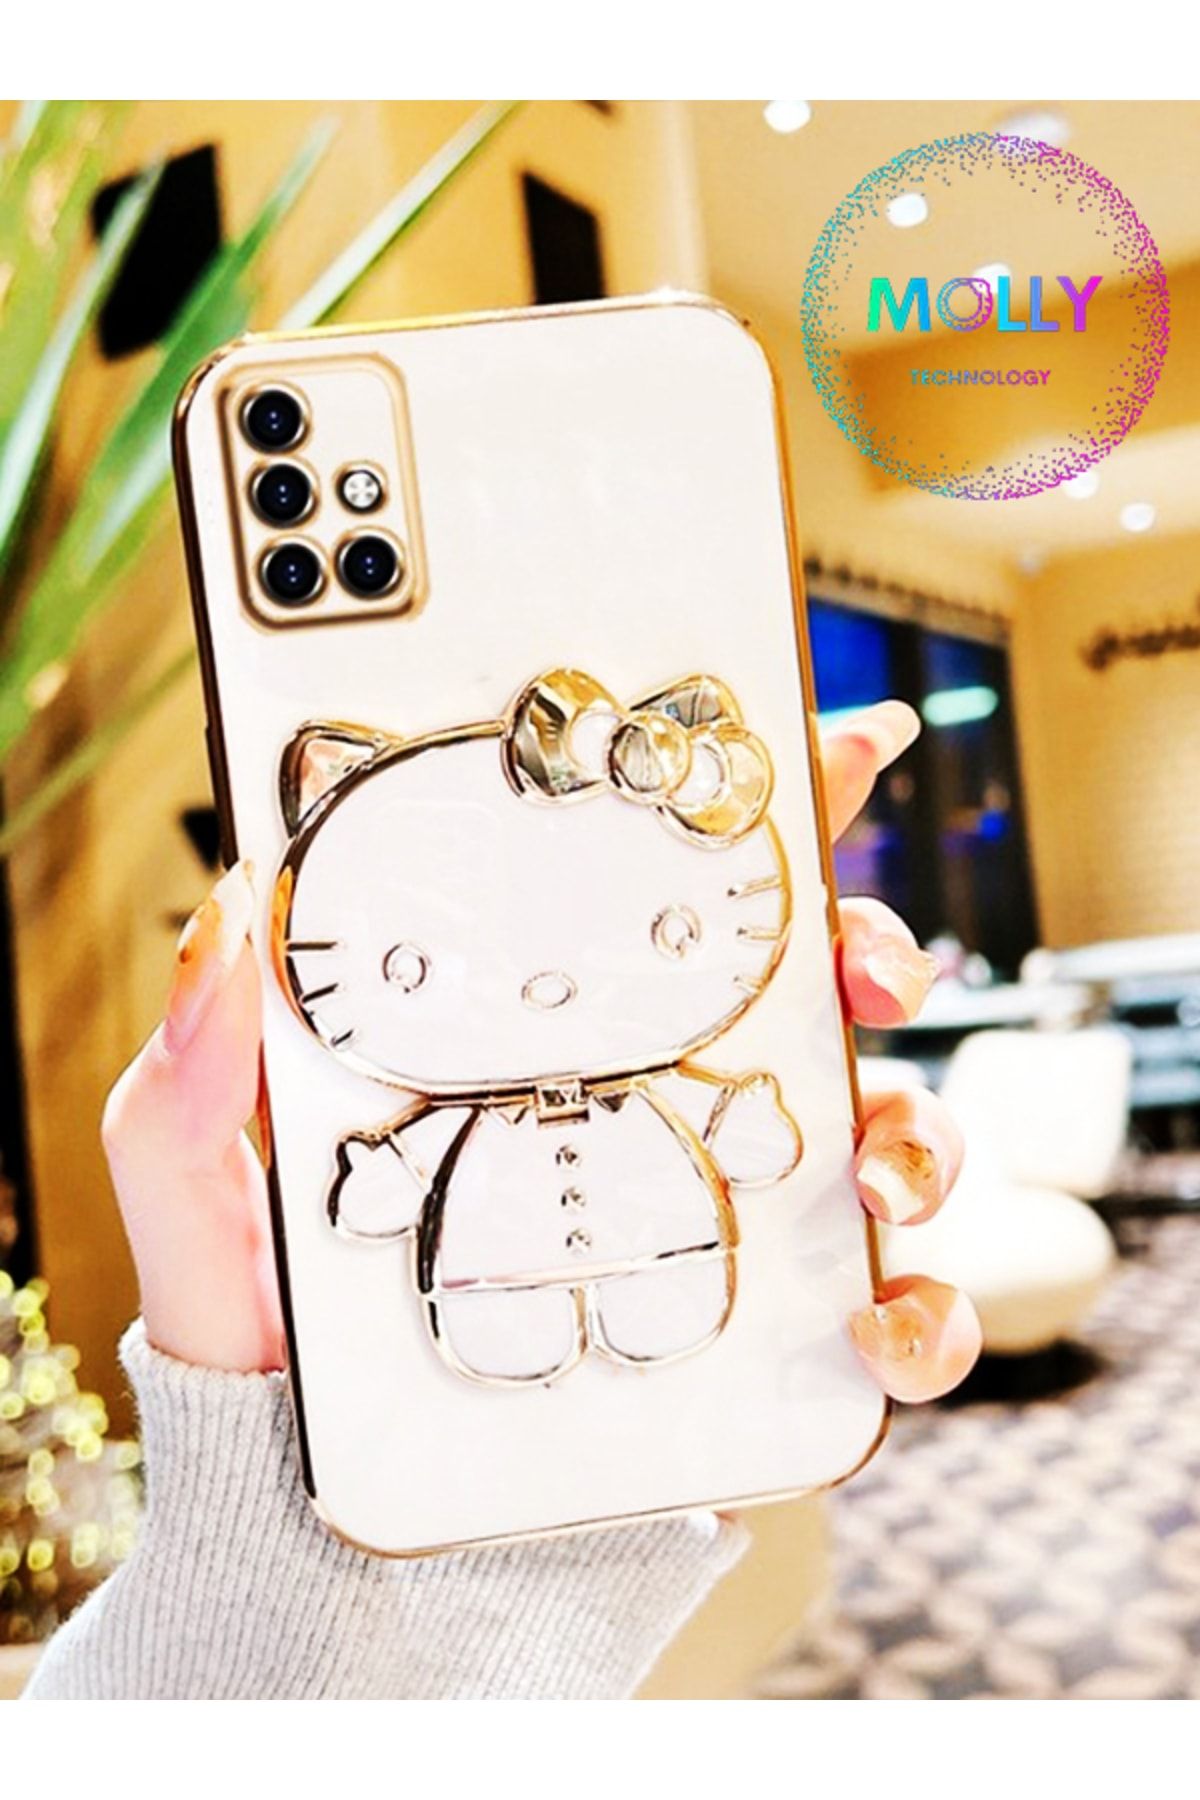 Molly Technology Samsung Galaxy A71 İçin İnci Beyazı Hello Kitty Standlı Kenarları Gold Detaylı Lüks Silikon Kılıf